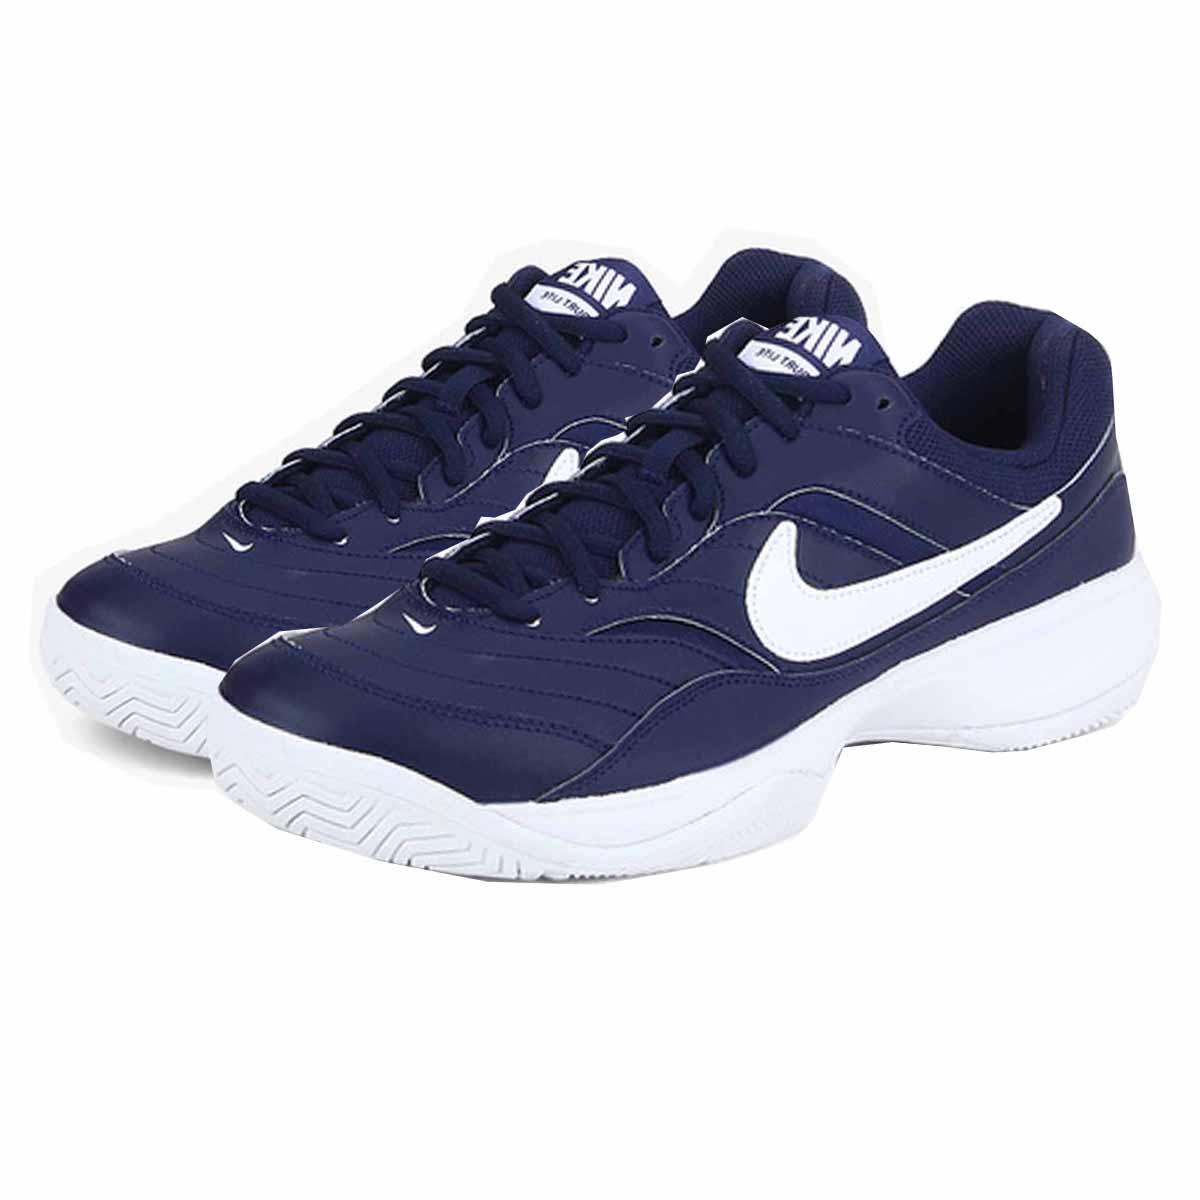 Nike Court Lite Tennis Shoes (Blue/White) Online India